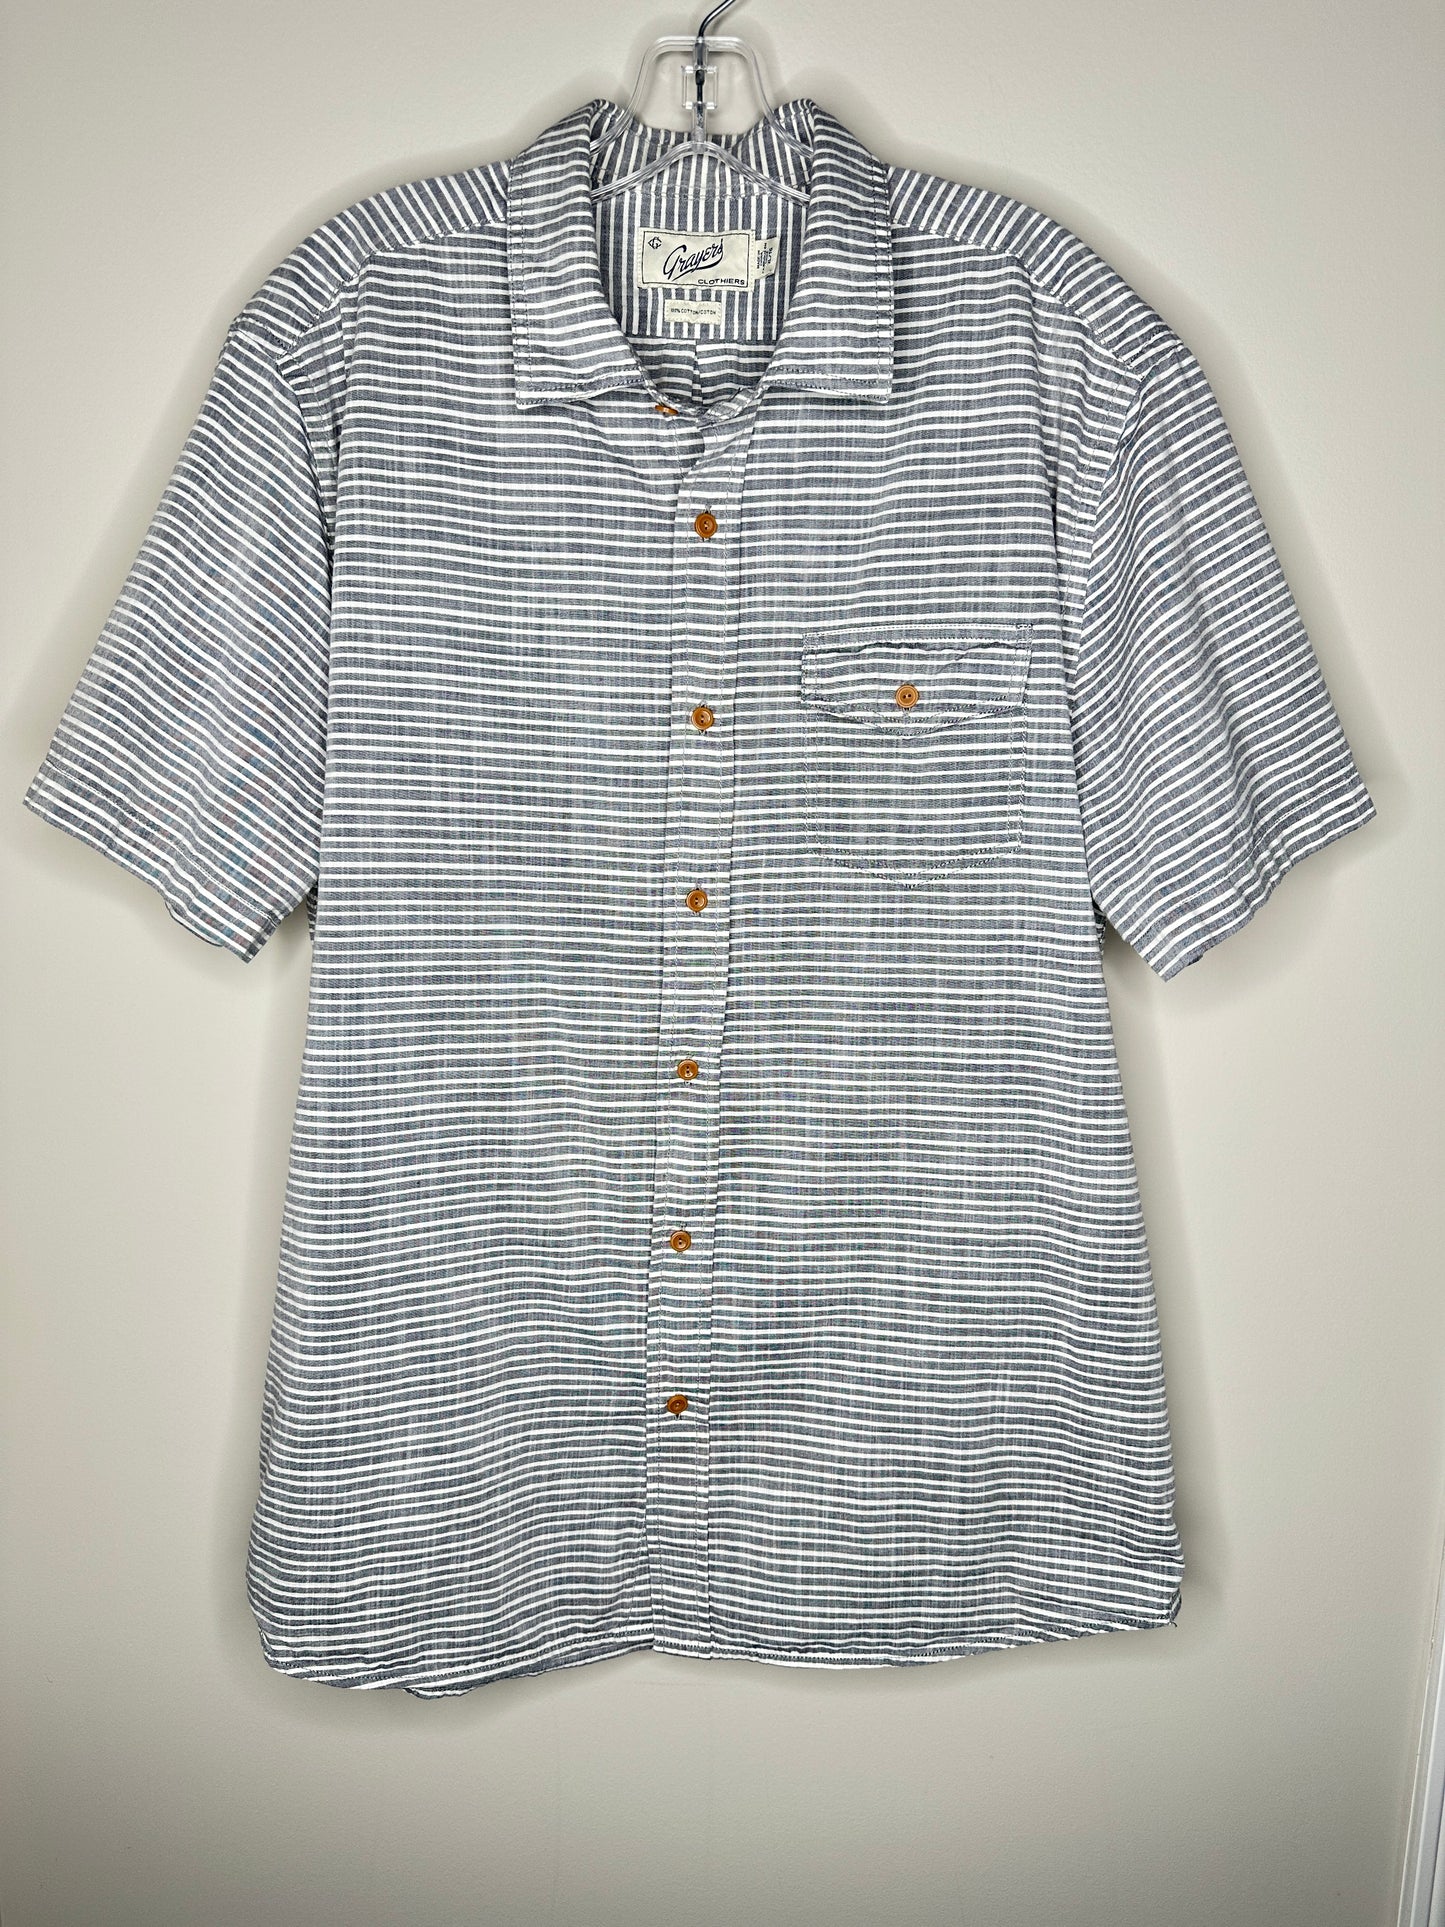 Grayers Clothiers Men's Size XL Gray & White Short Sleeve Button-Up Shirt